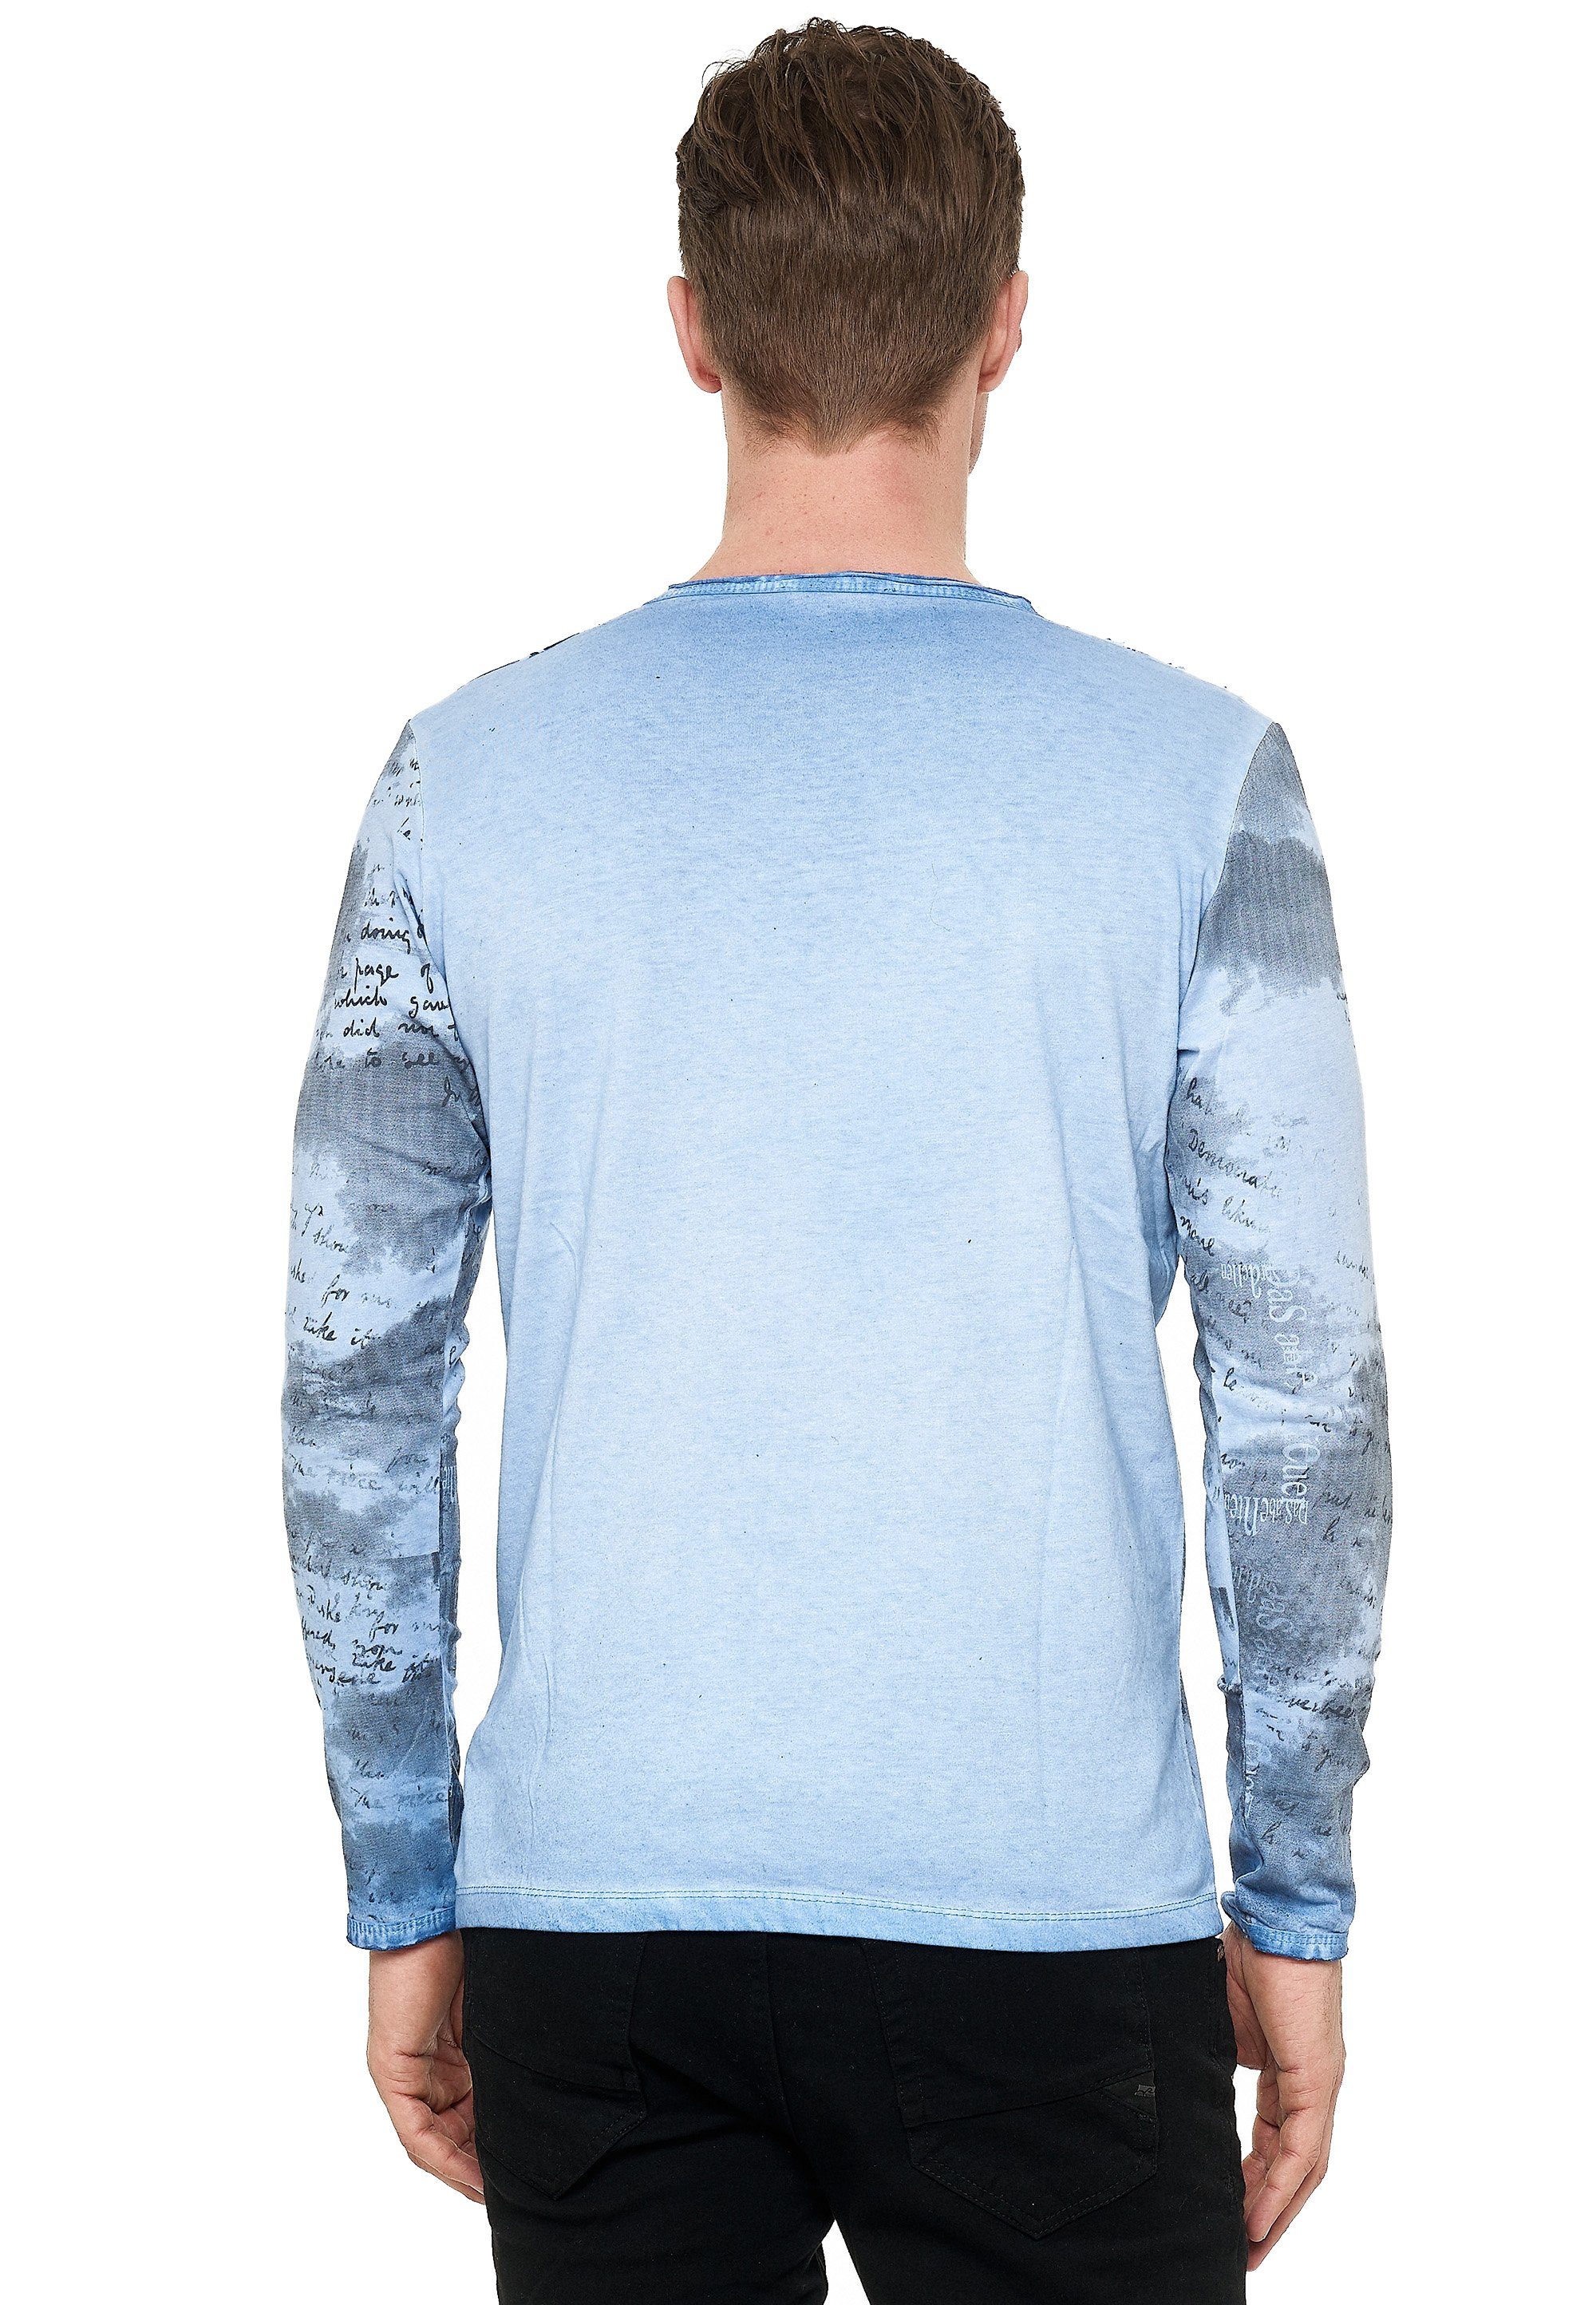 Batik-Print blau Neal Rusty mit Langarmshirt